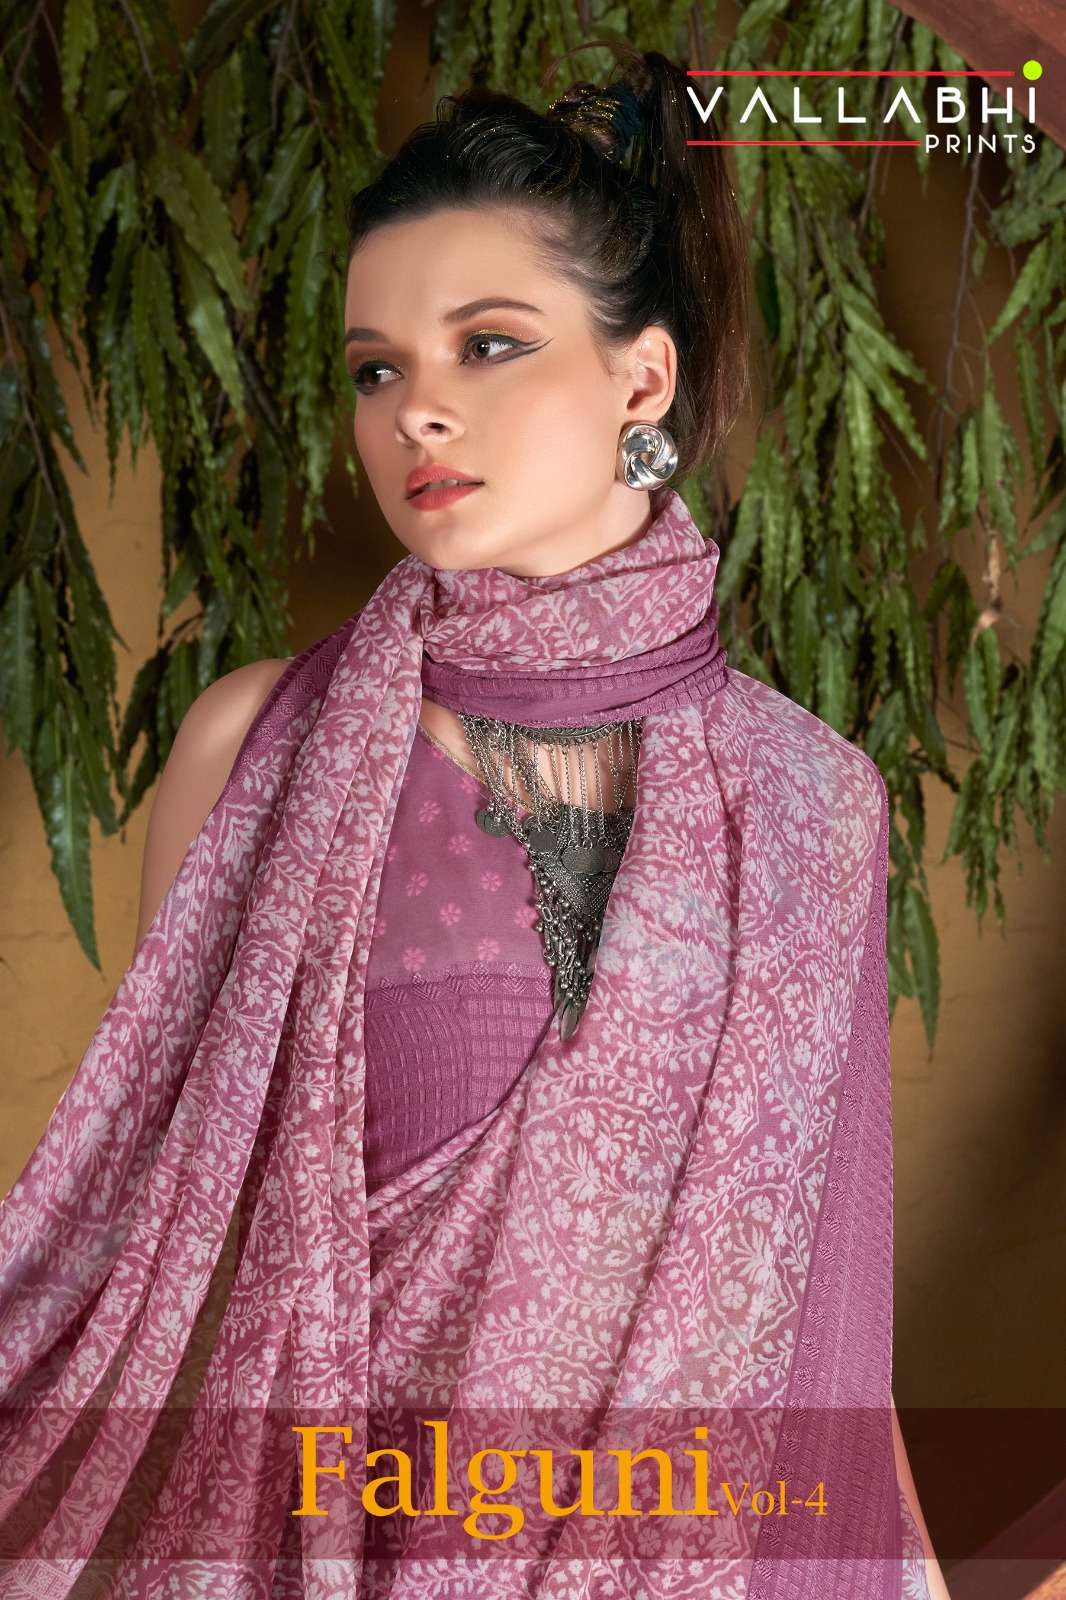 falguni vol 4 by vallabhi prints casual wear saree collection 